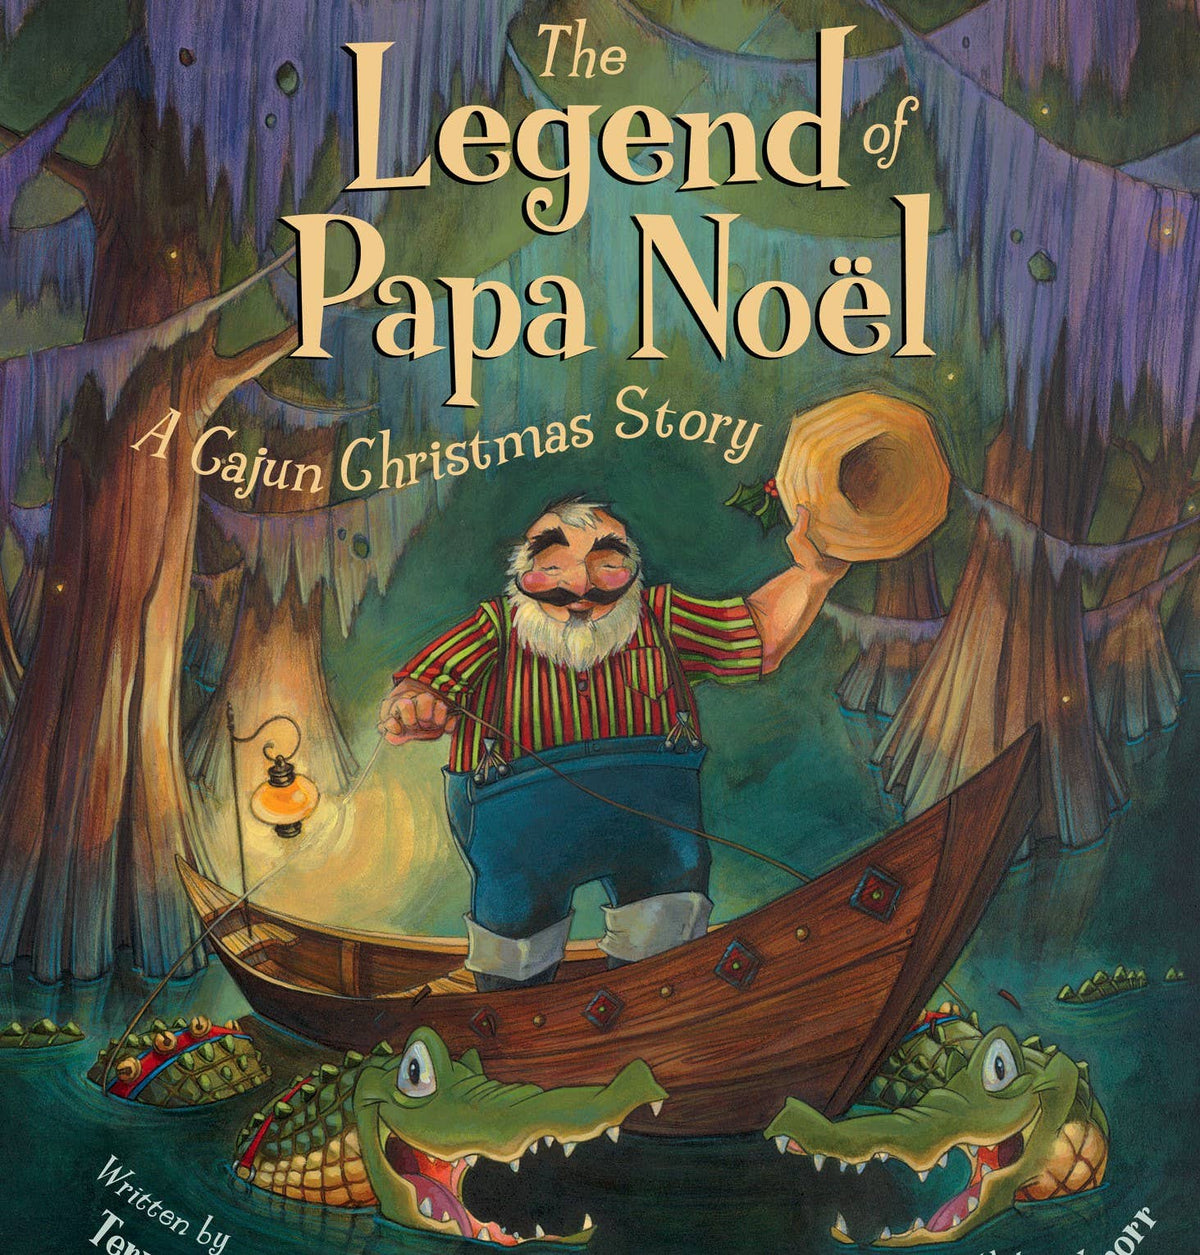 The Legend of Papa Noel: A Cajun Christmas Story Book